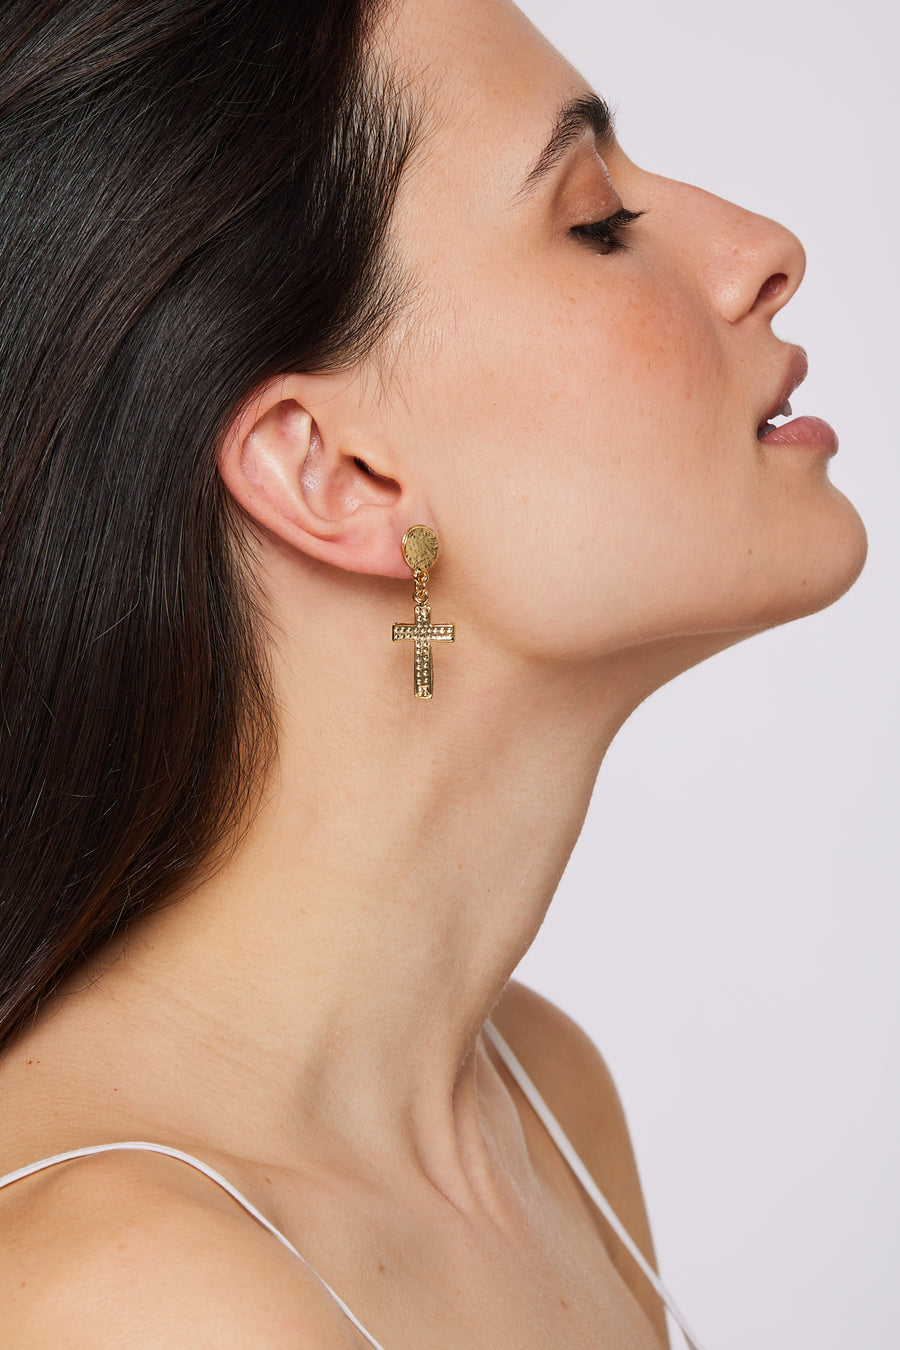 Santa Margherita earrings